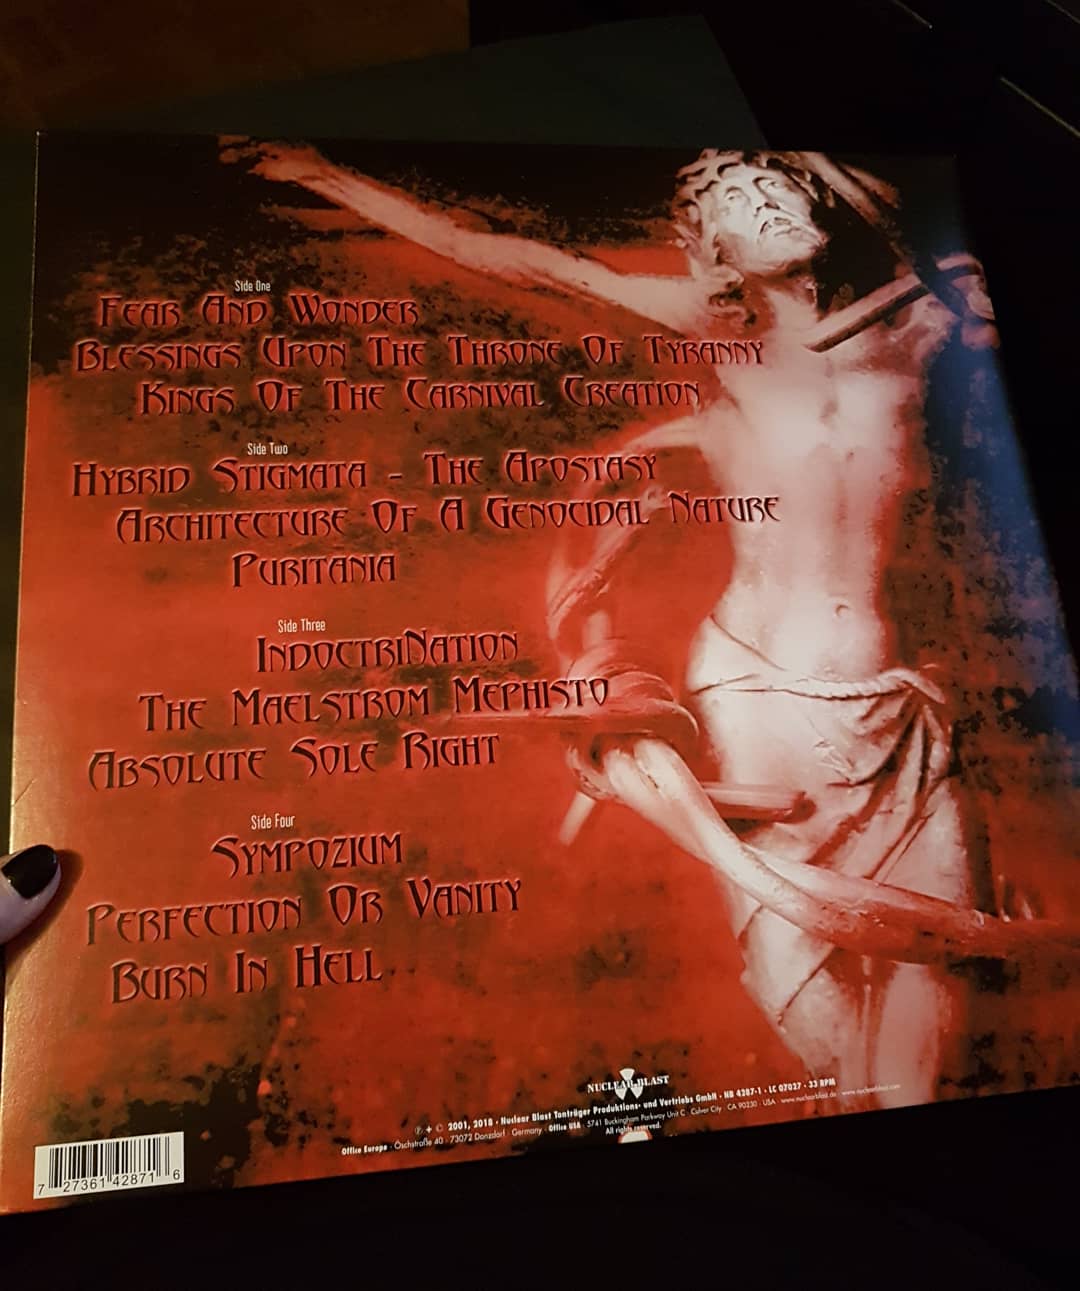 Dimmu Borgir – Puritanical Euphoric Misanthropia [2001